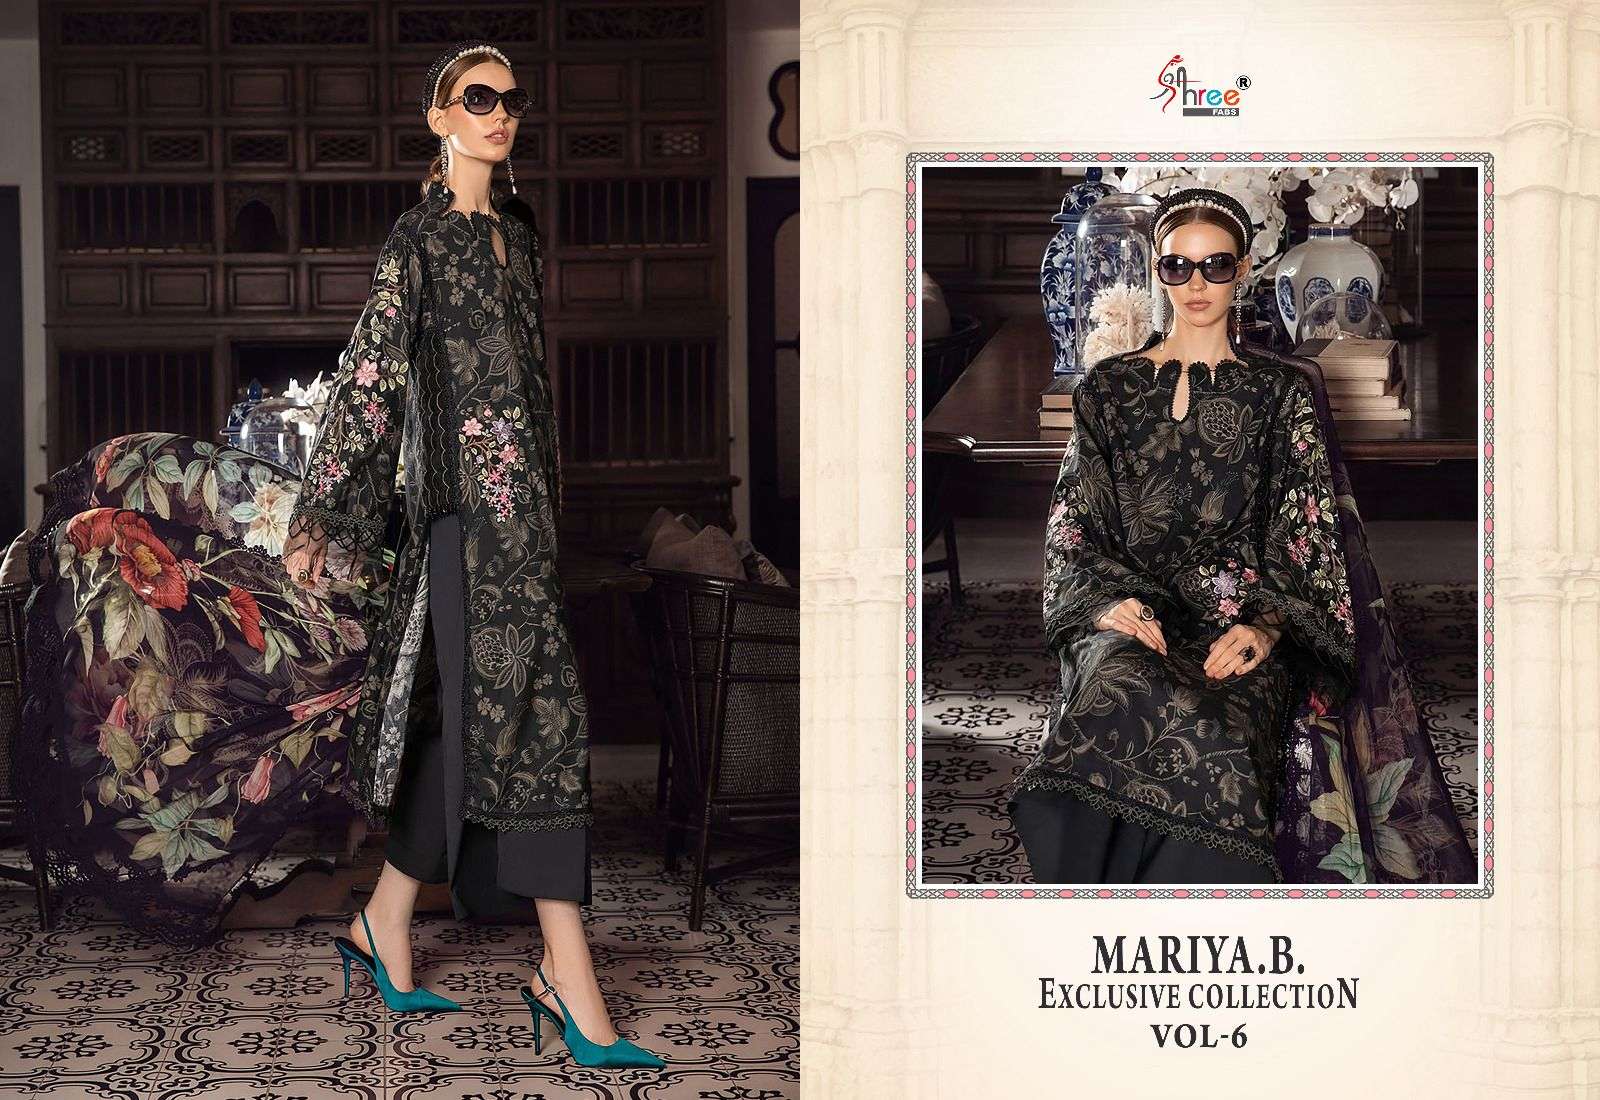 shree fabs maria b exclusive collection vol-6 3298-3305 series designer wedding wear pakistani suit wholesaler surat gujarat